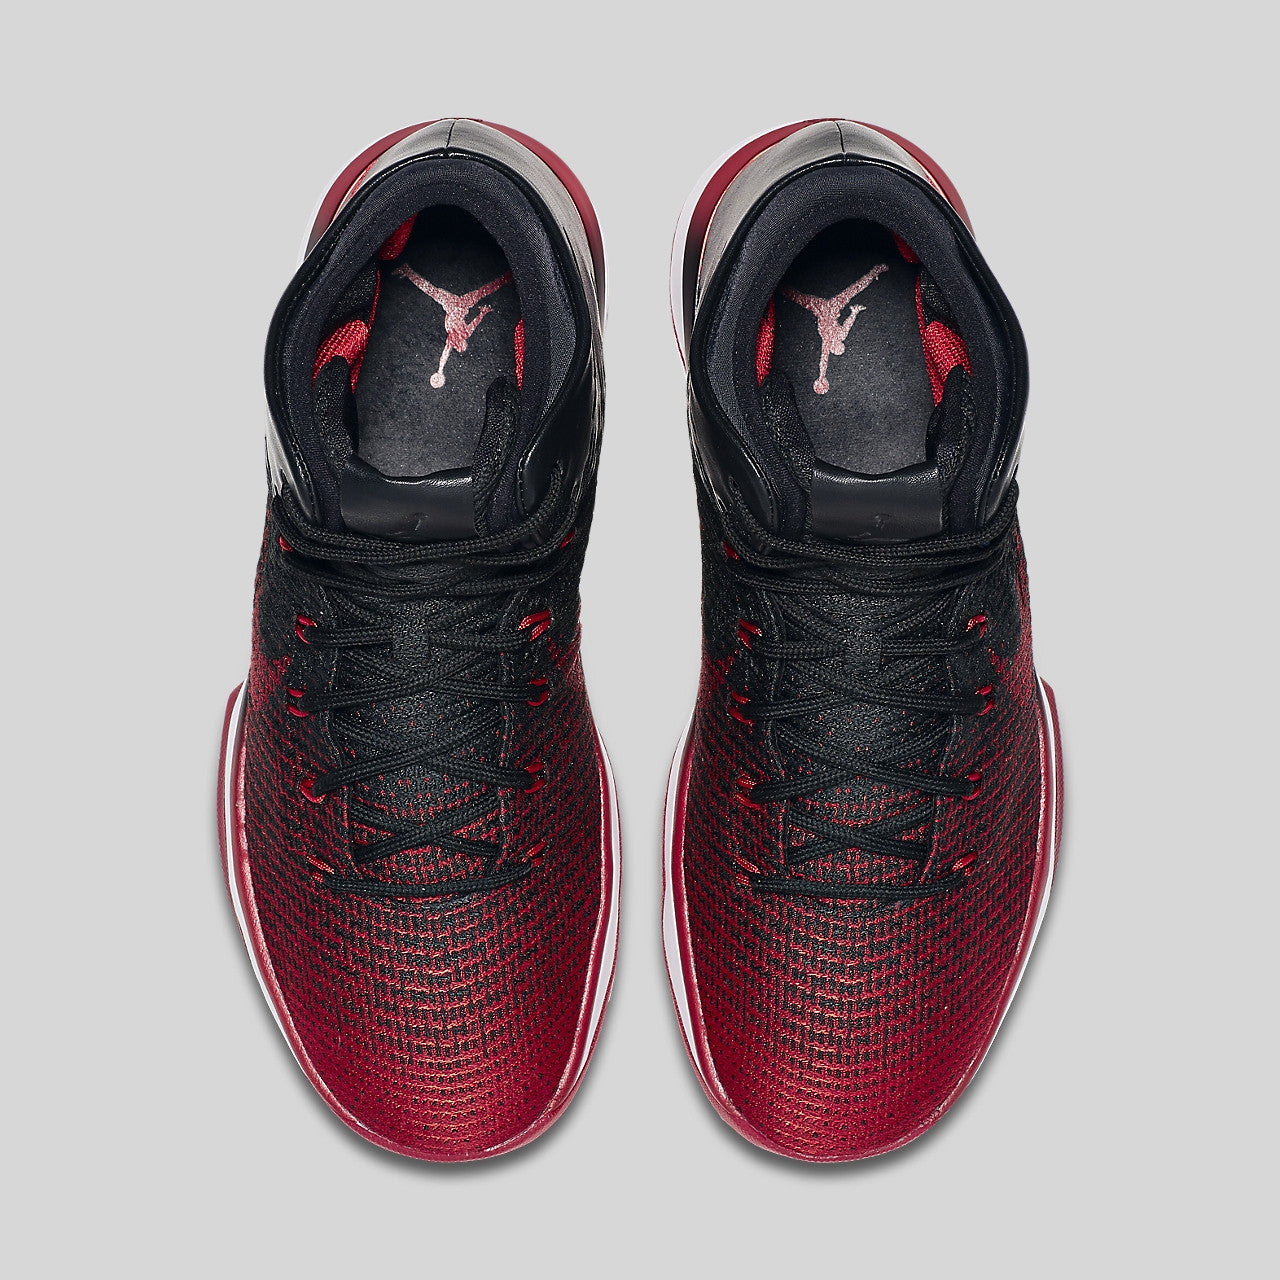 Nike Air Jordan Xxxi Banned Bred 001 Kix Files